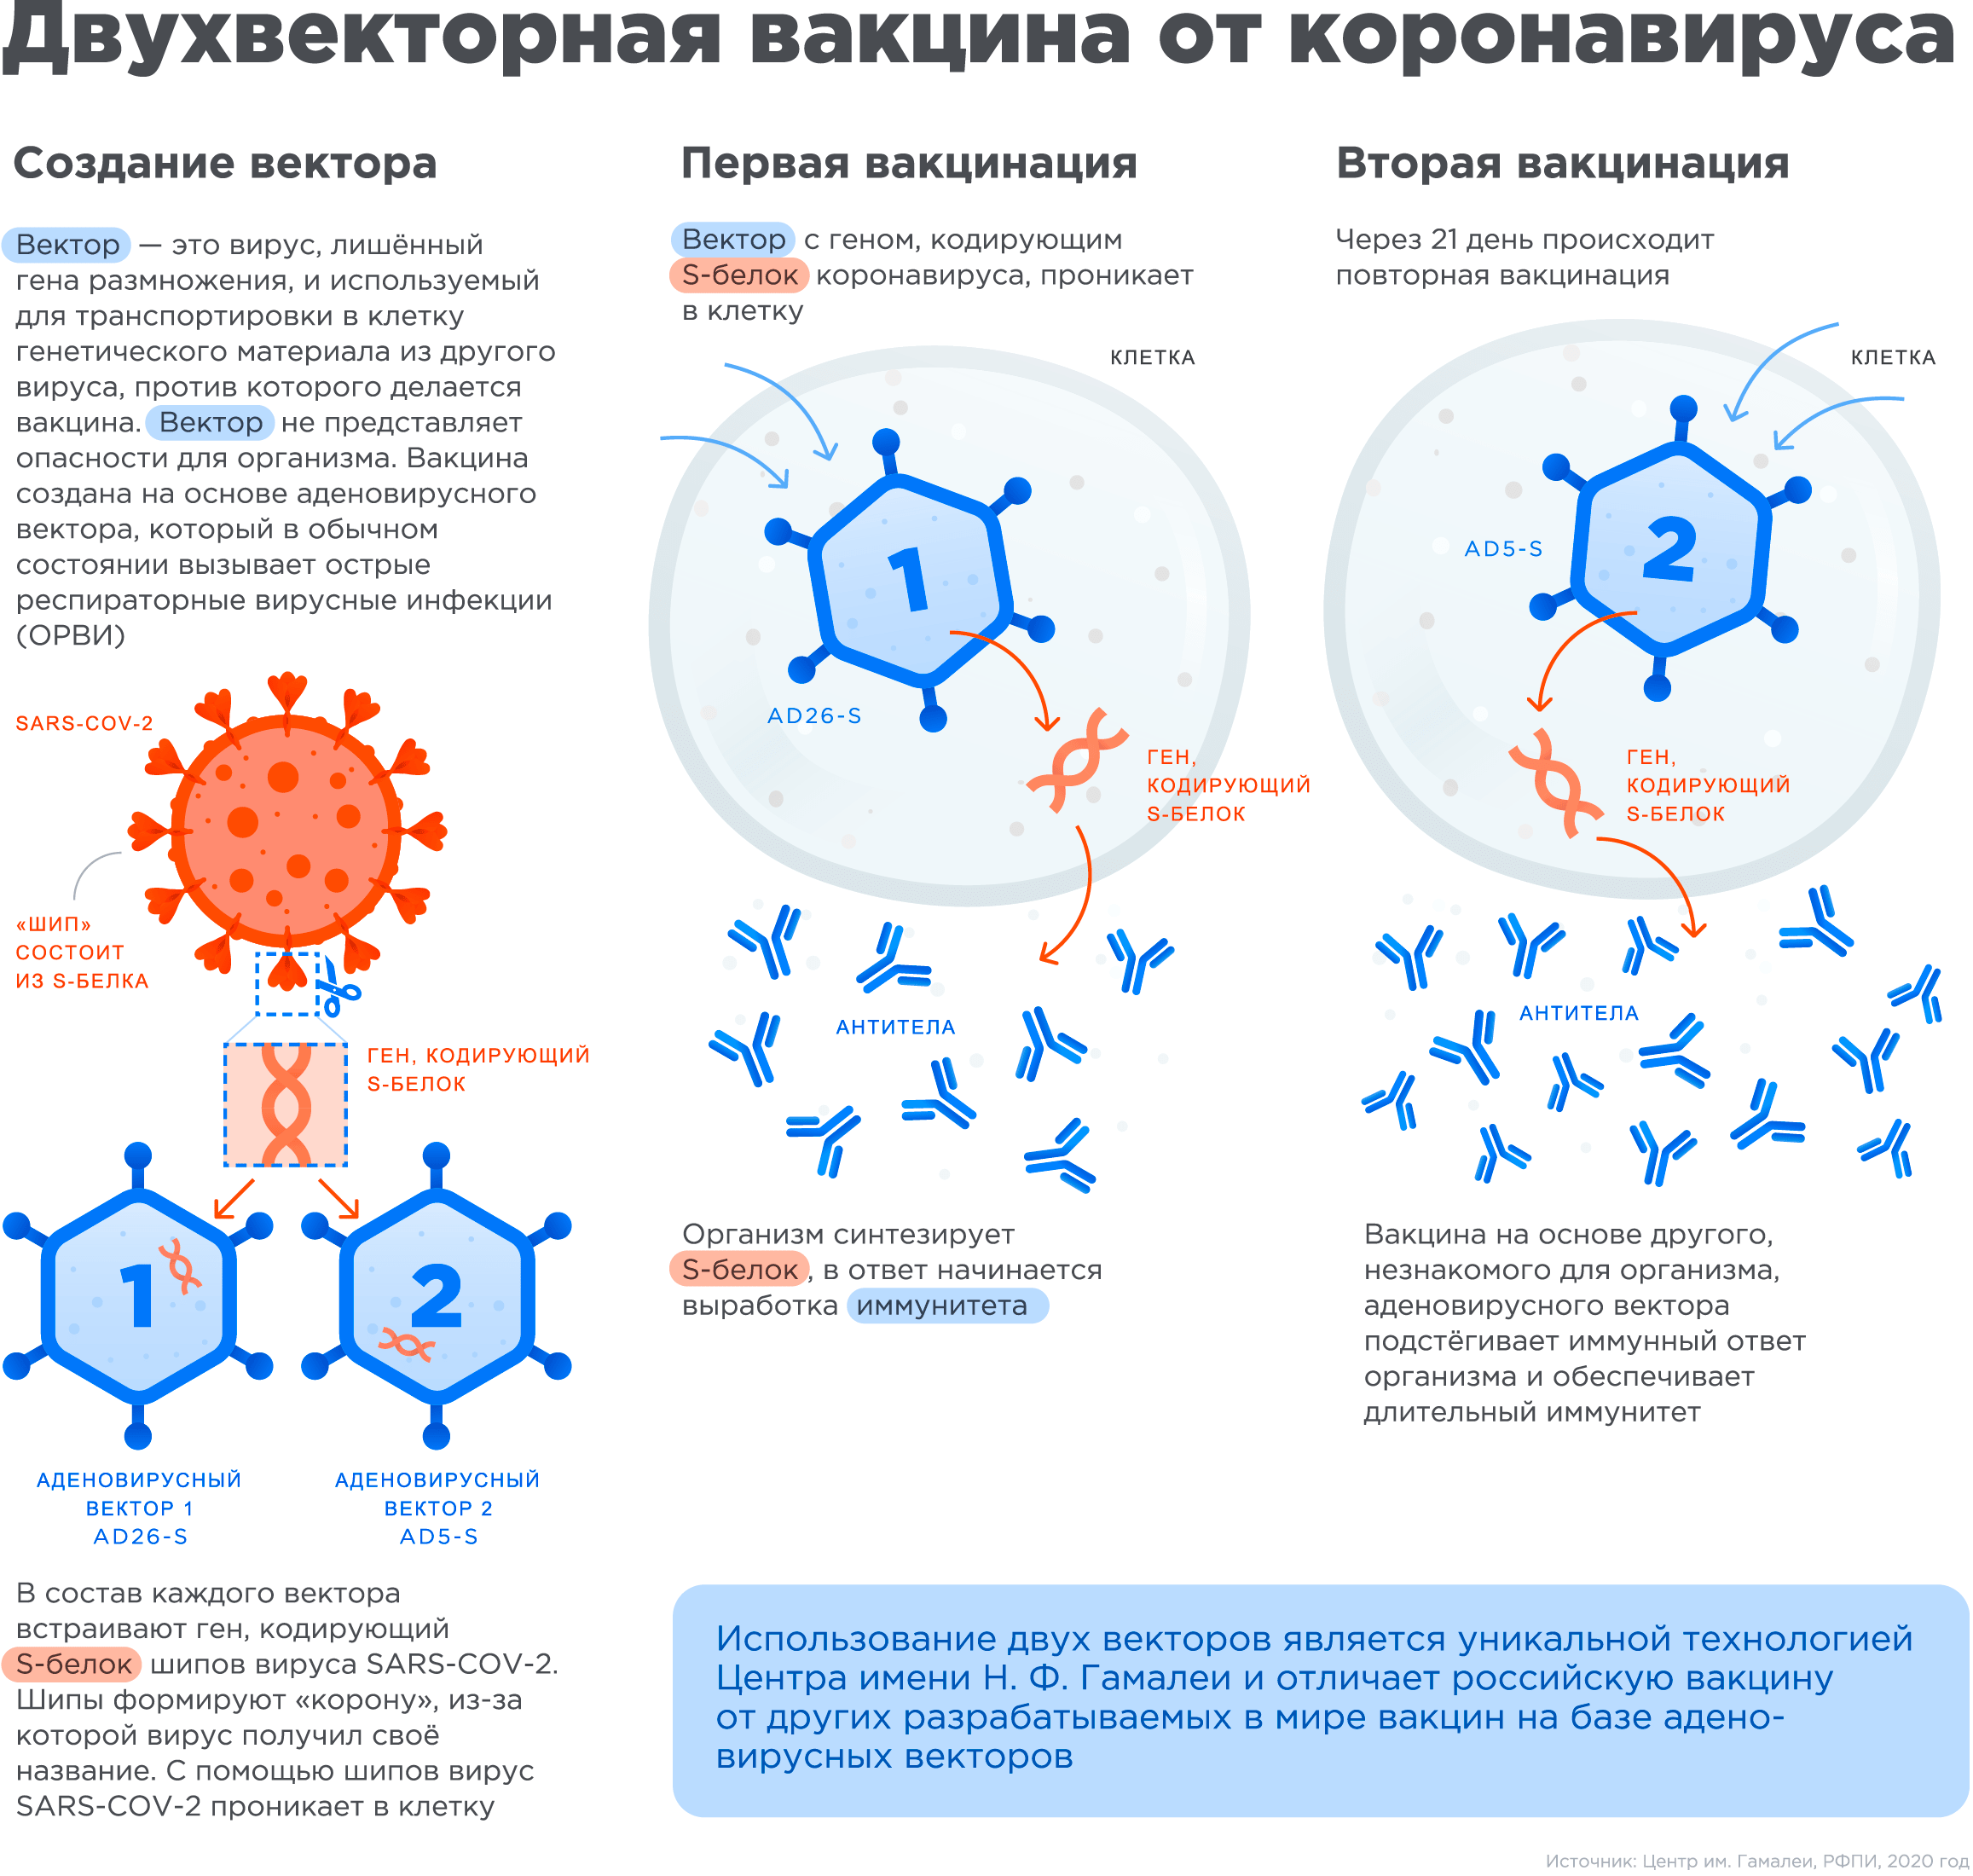 Источник: https://www.gamaleya.org/research/vaktsina-protiv-covid-19/